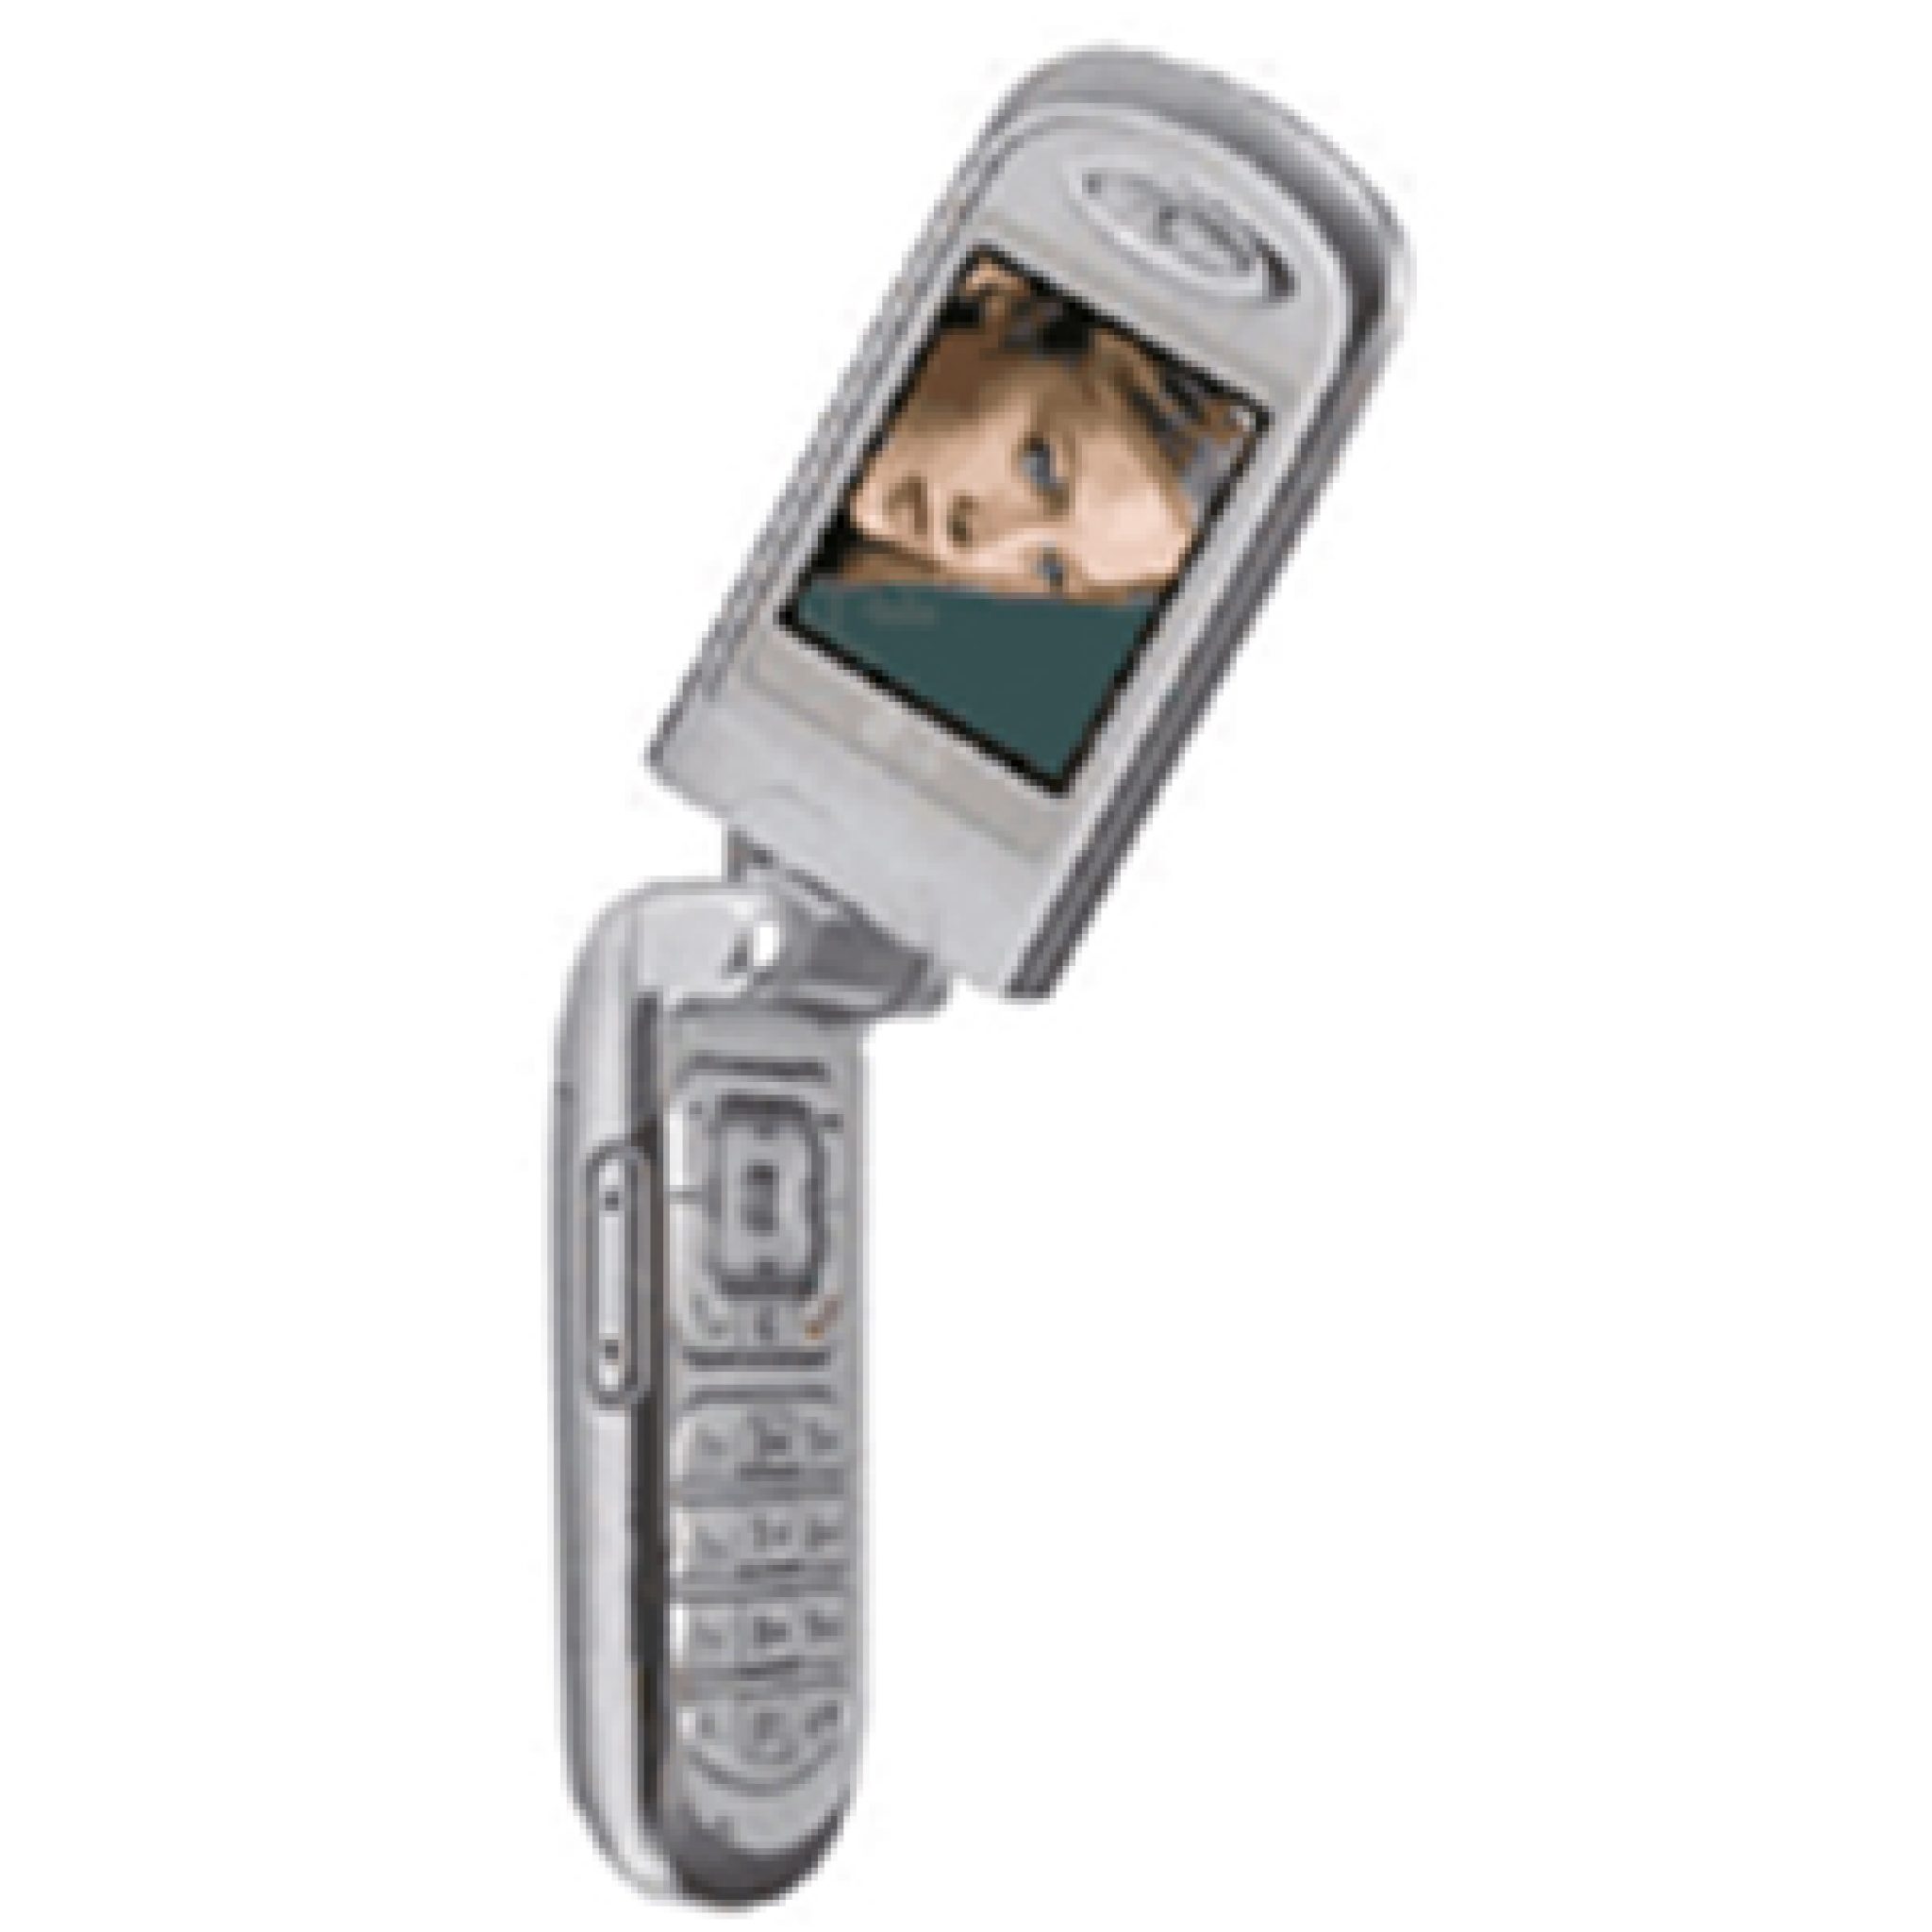 Телефон LG g7070